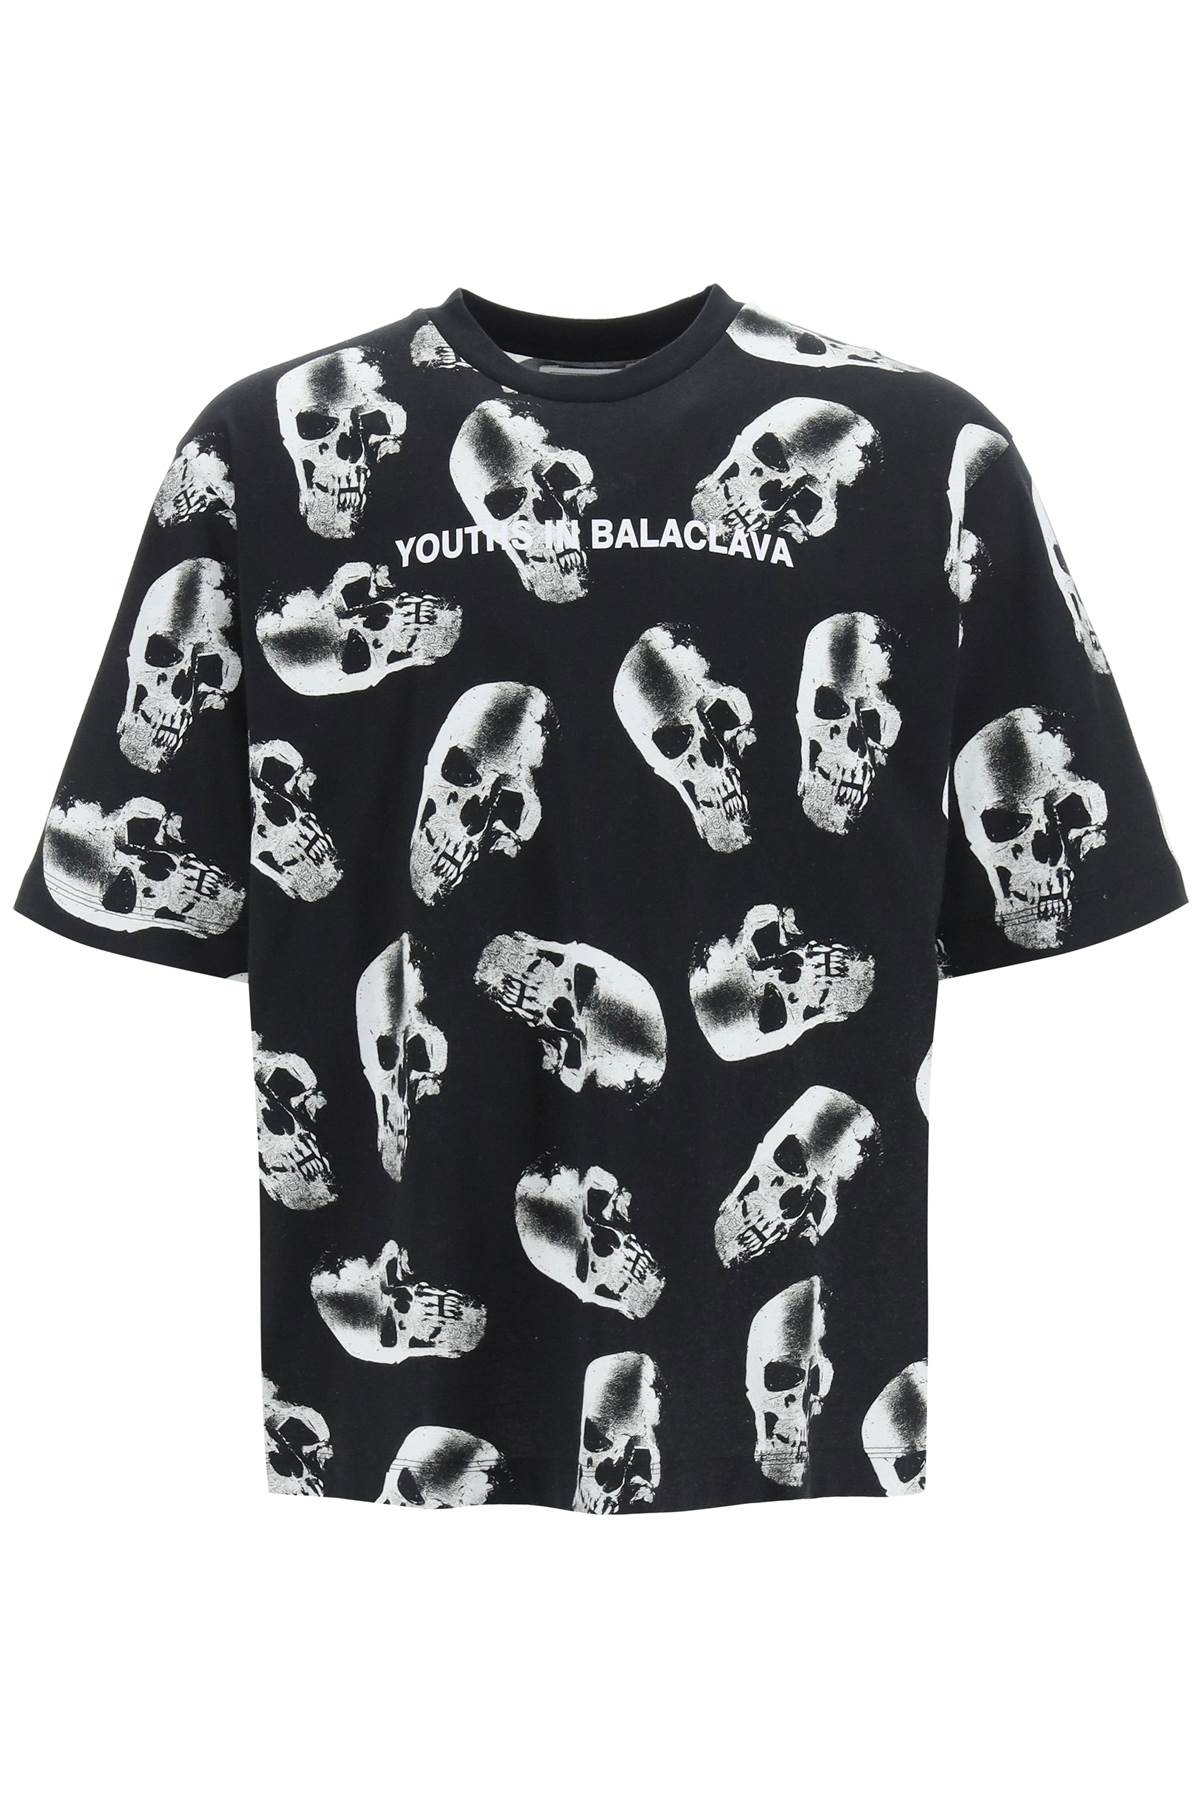 Youths In Balaclava Skull T-shirt